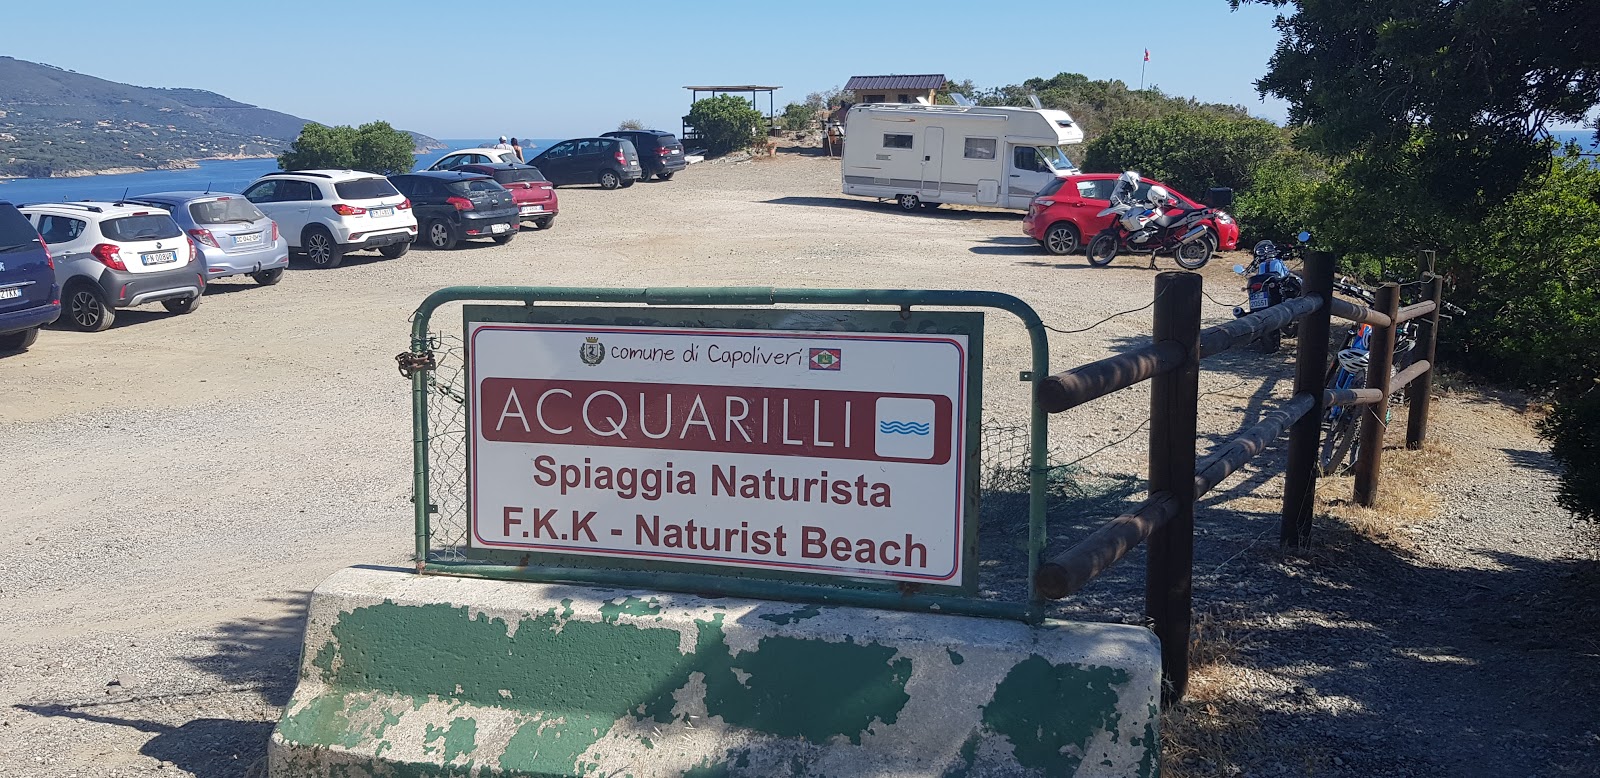 Spiaggia Di Acquarilli'in fotoğrafı turkuaz saf su yüzey ile